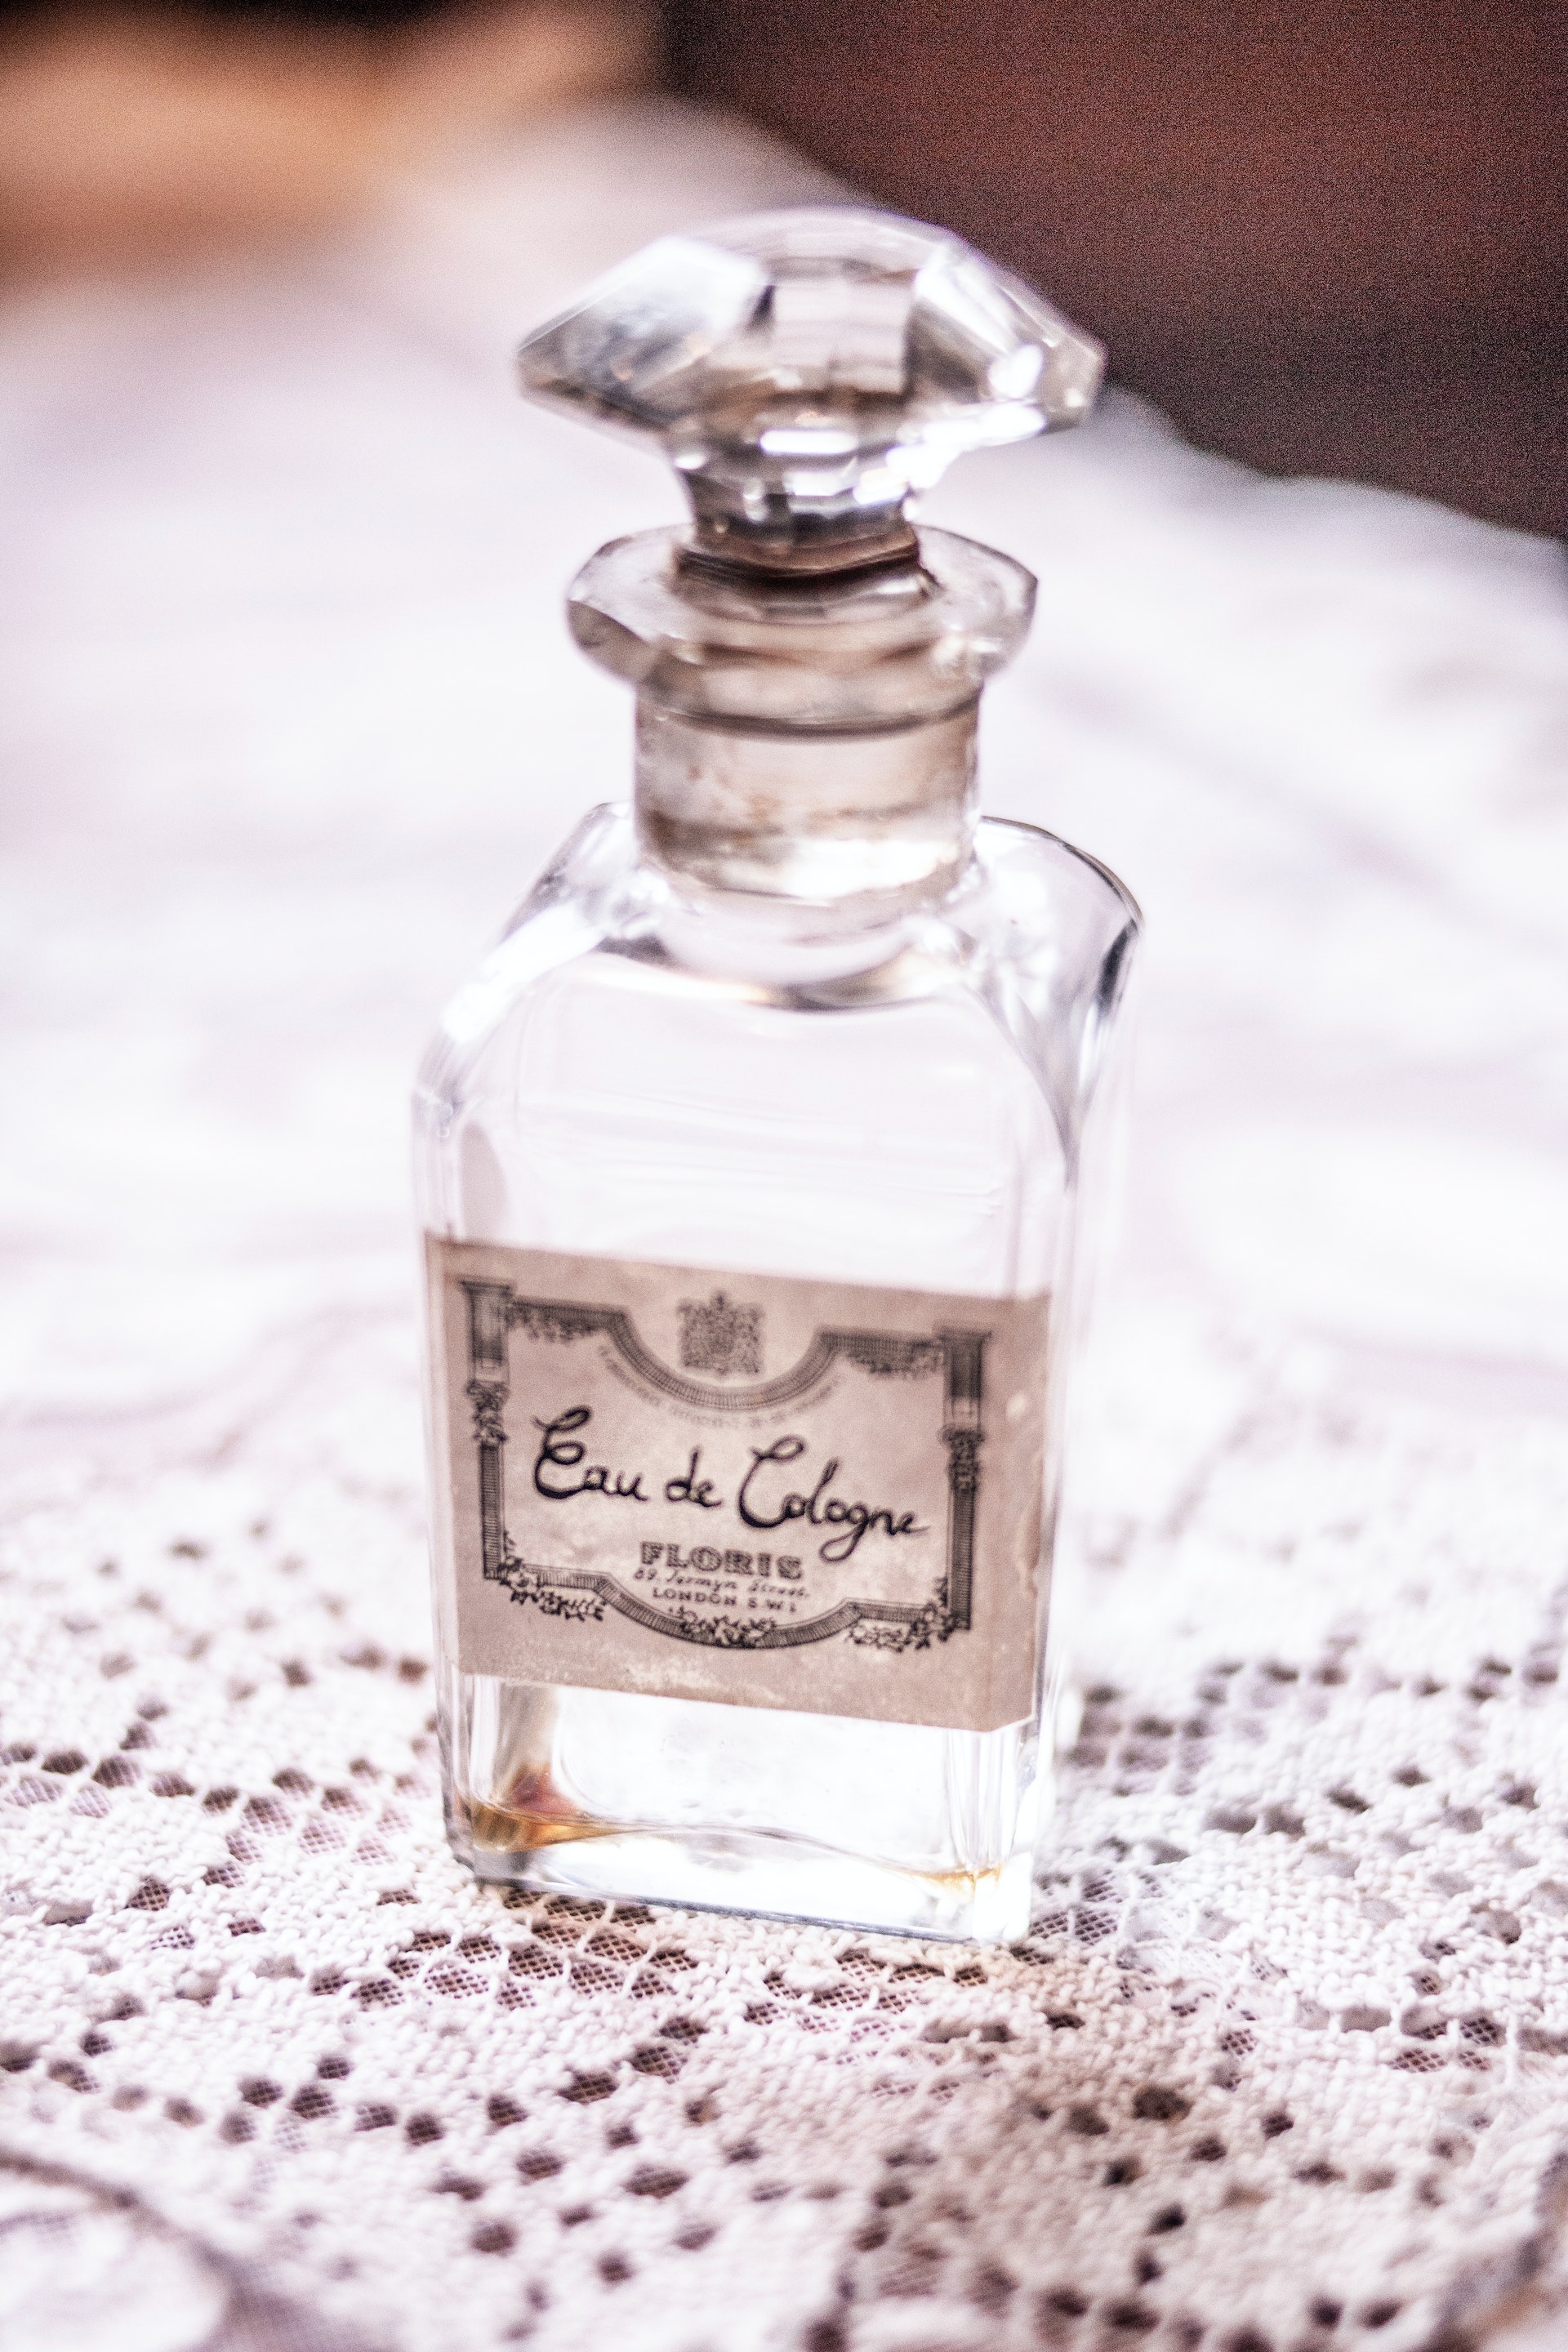 A perfume bottle | Source: Pexels